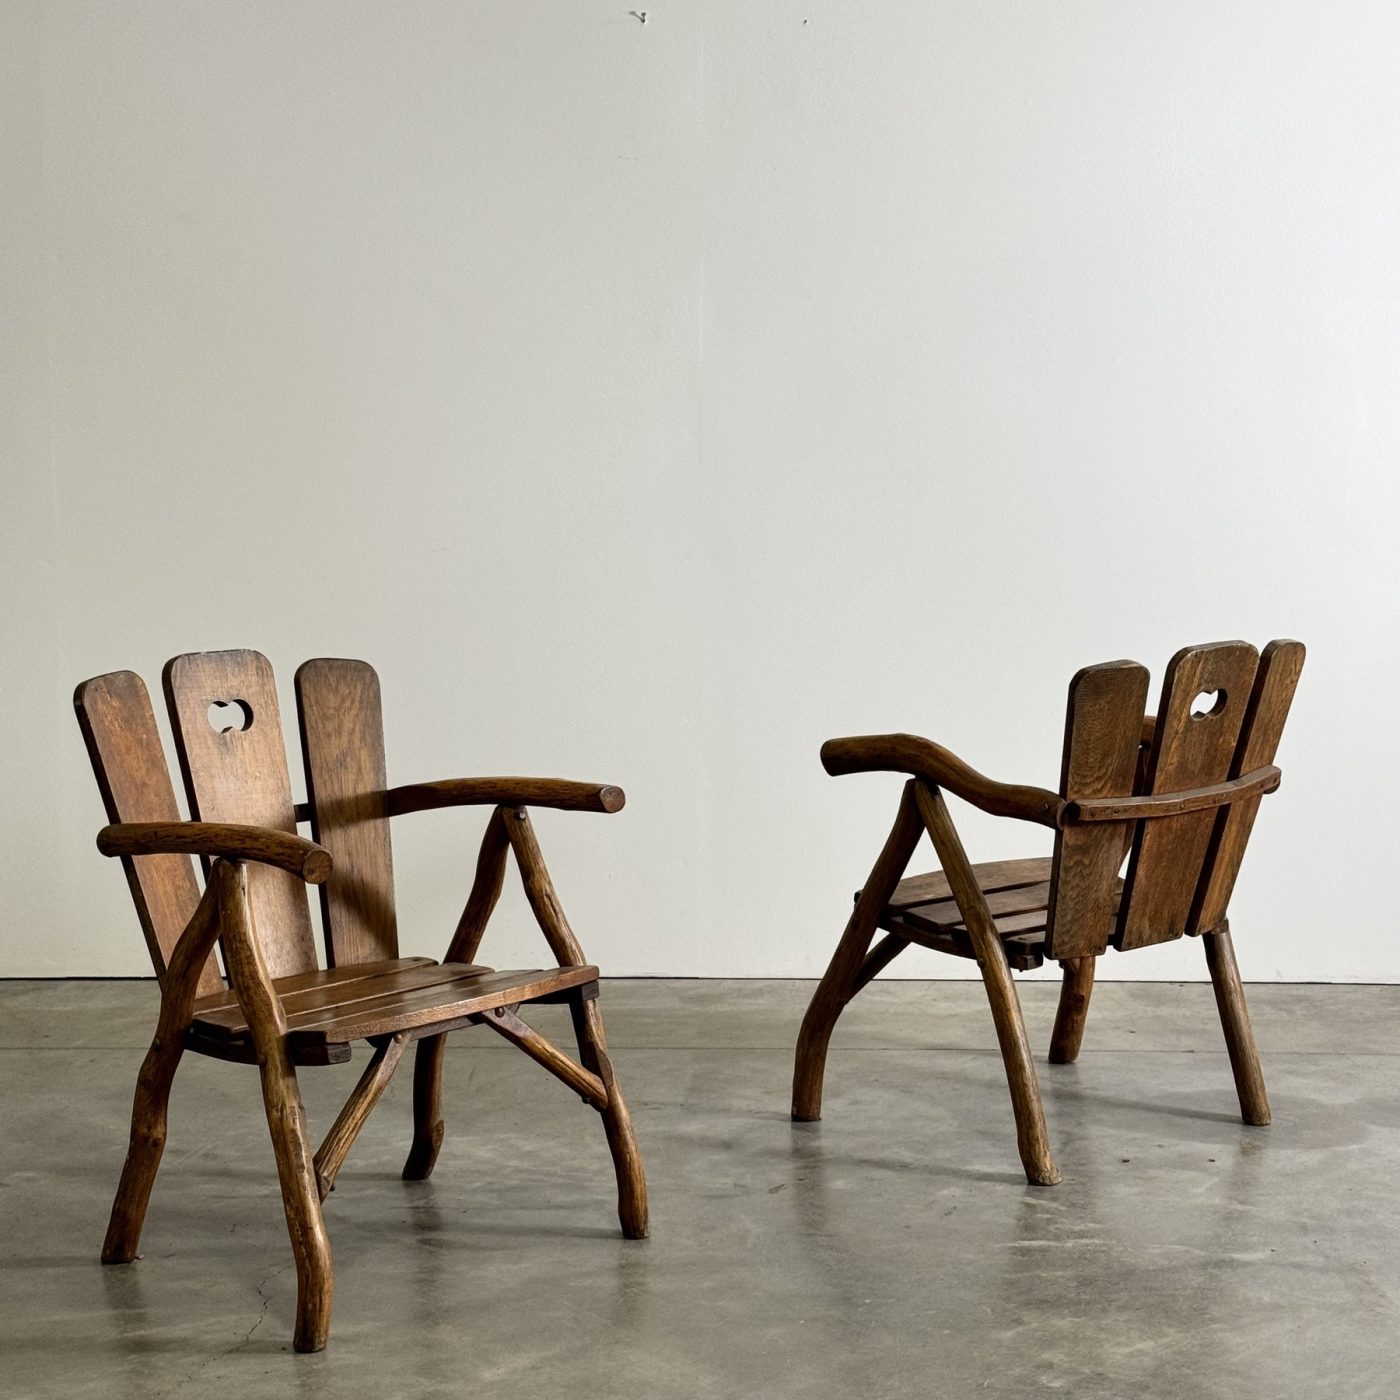 objet-vagabond-wooden-armchairs0004